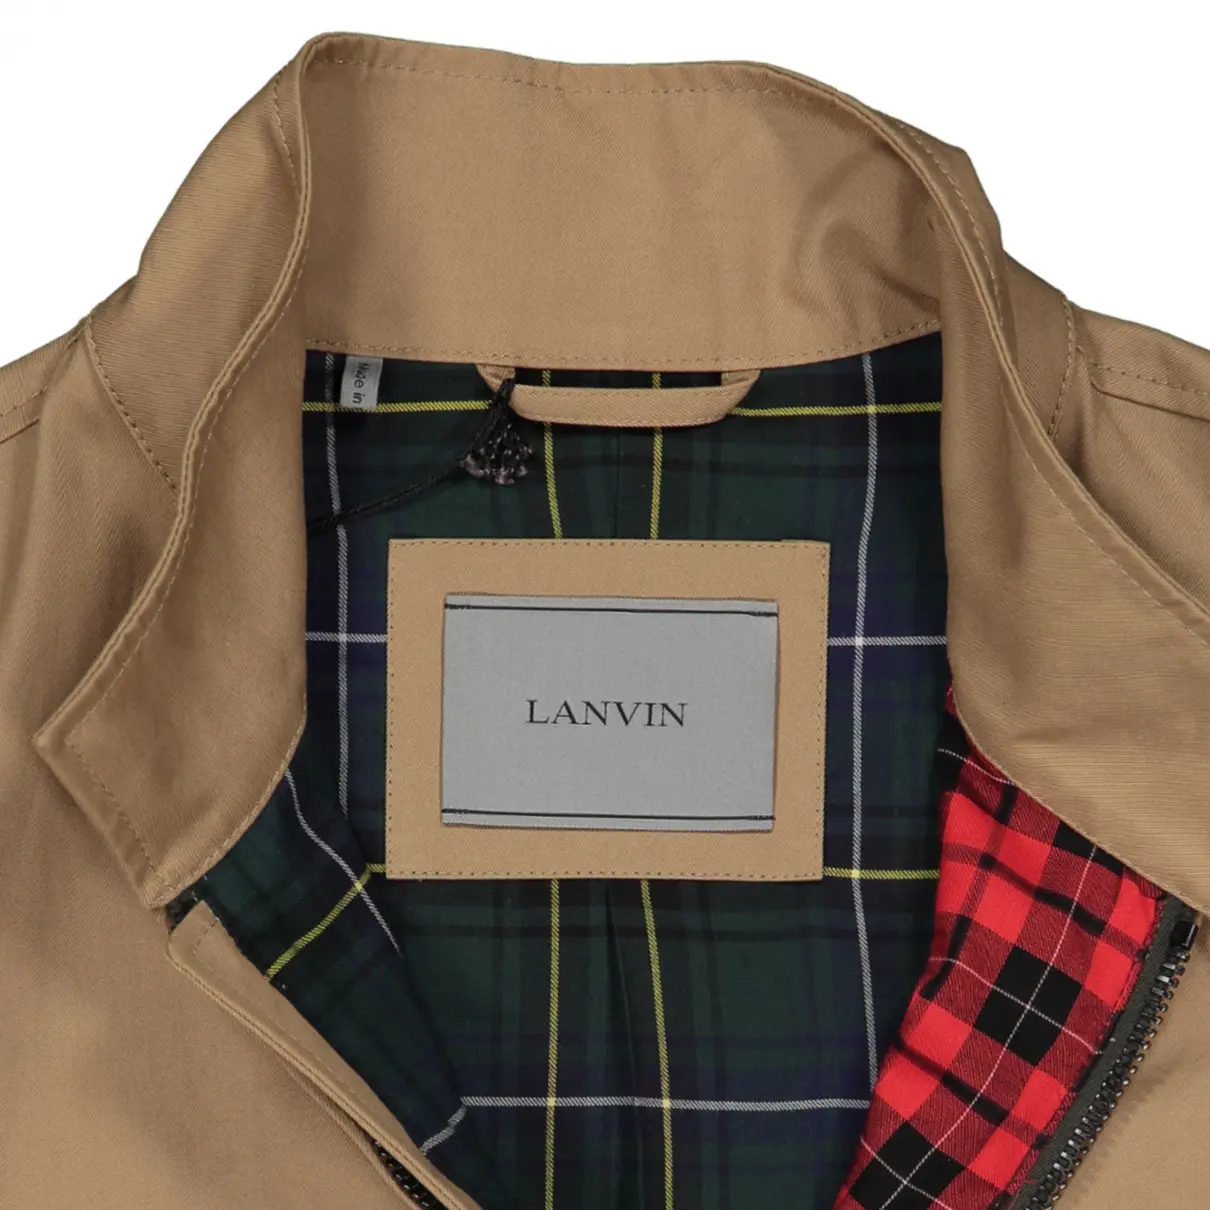 Buy Lanvin Jacket online